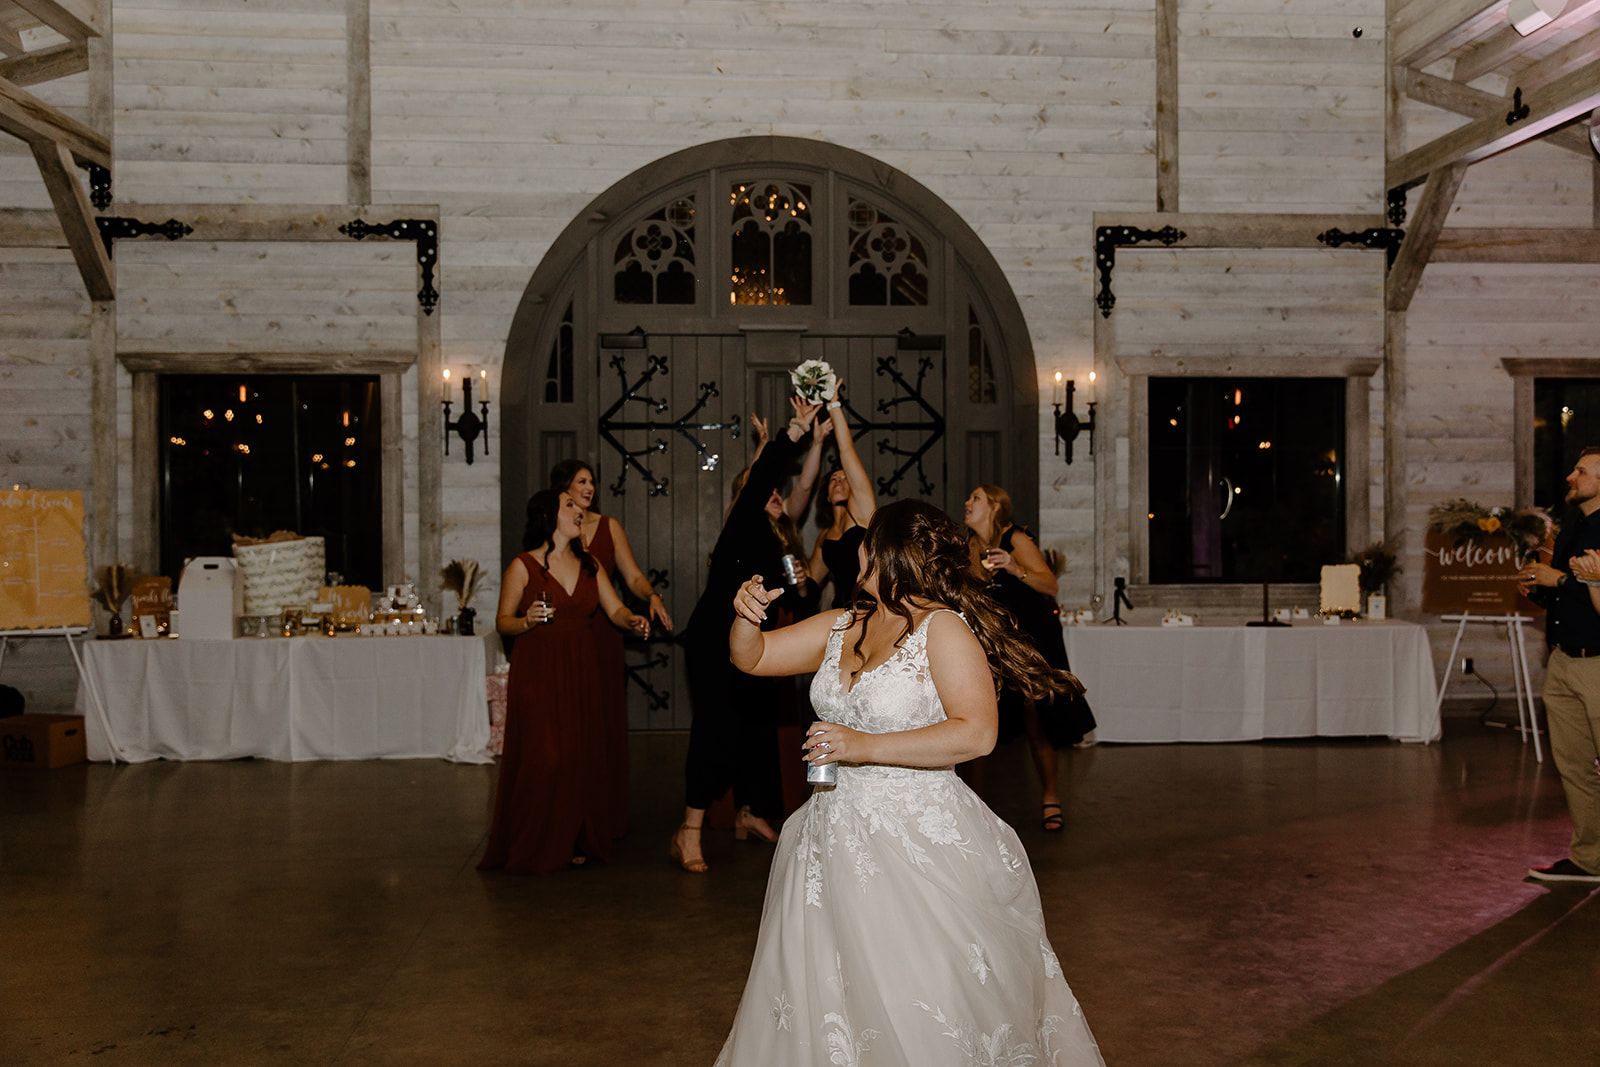 Bride throws bouquet to ladies